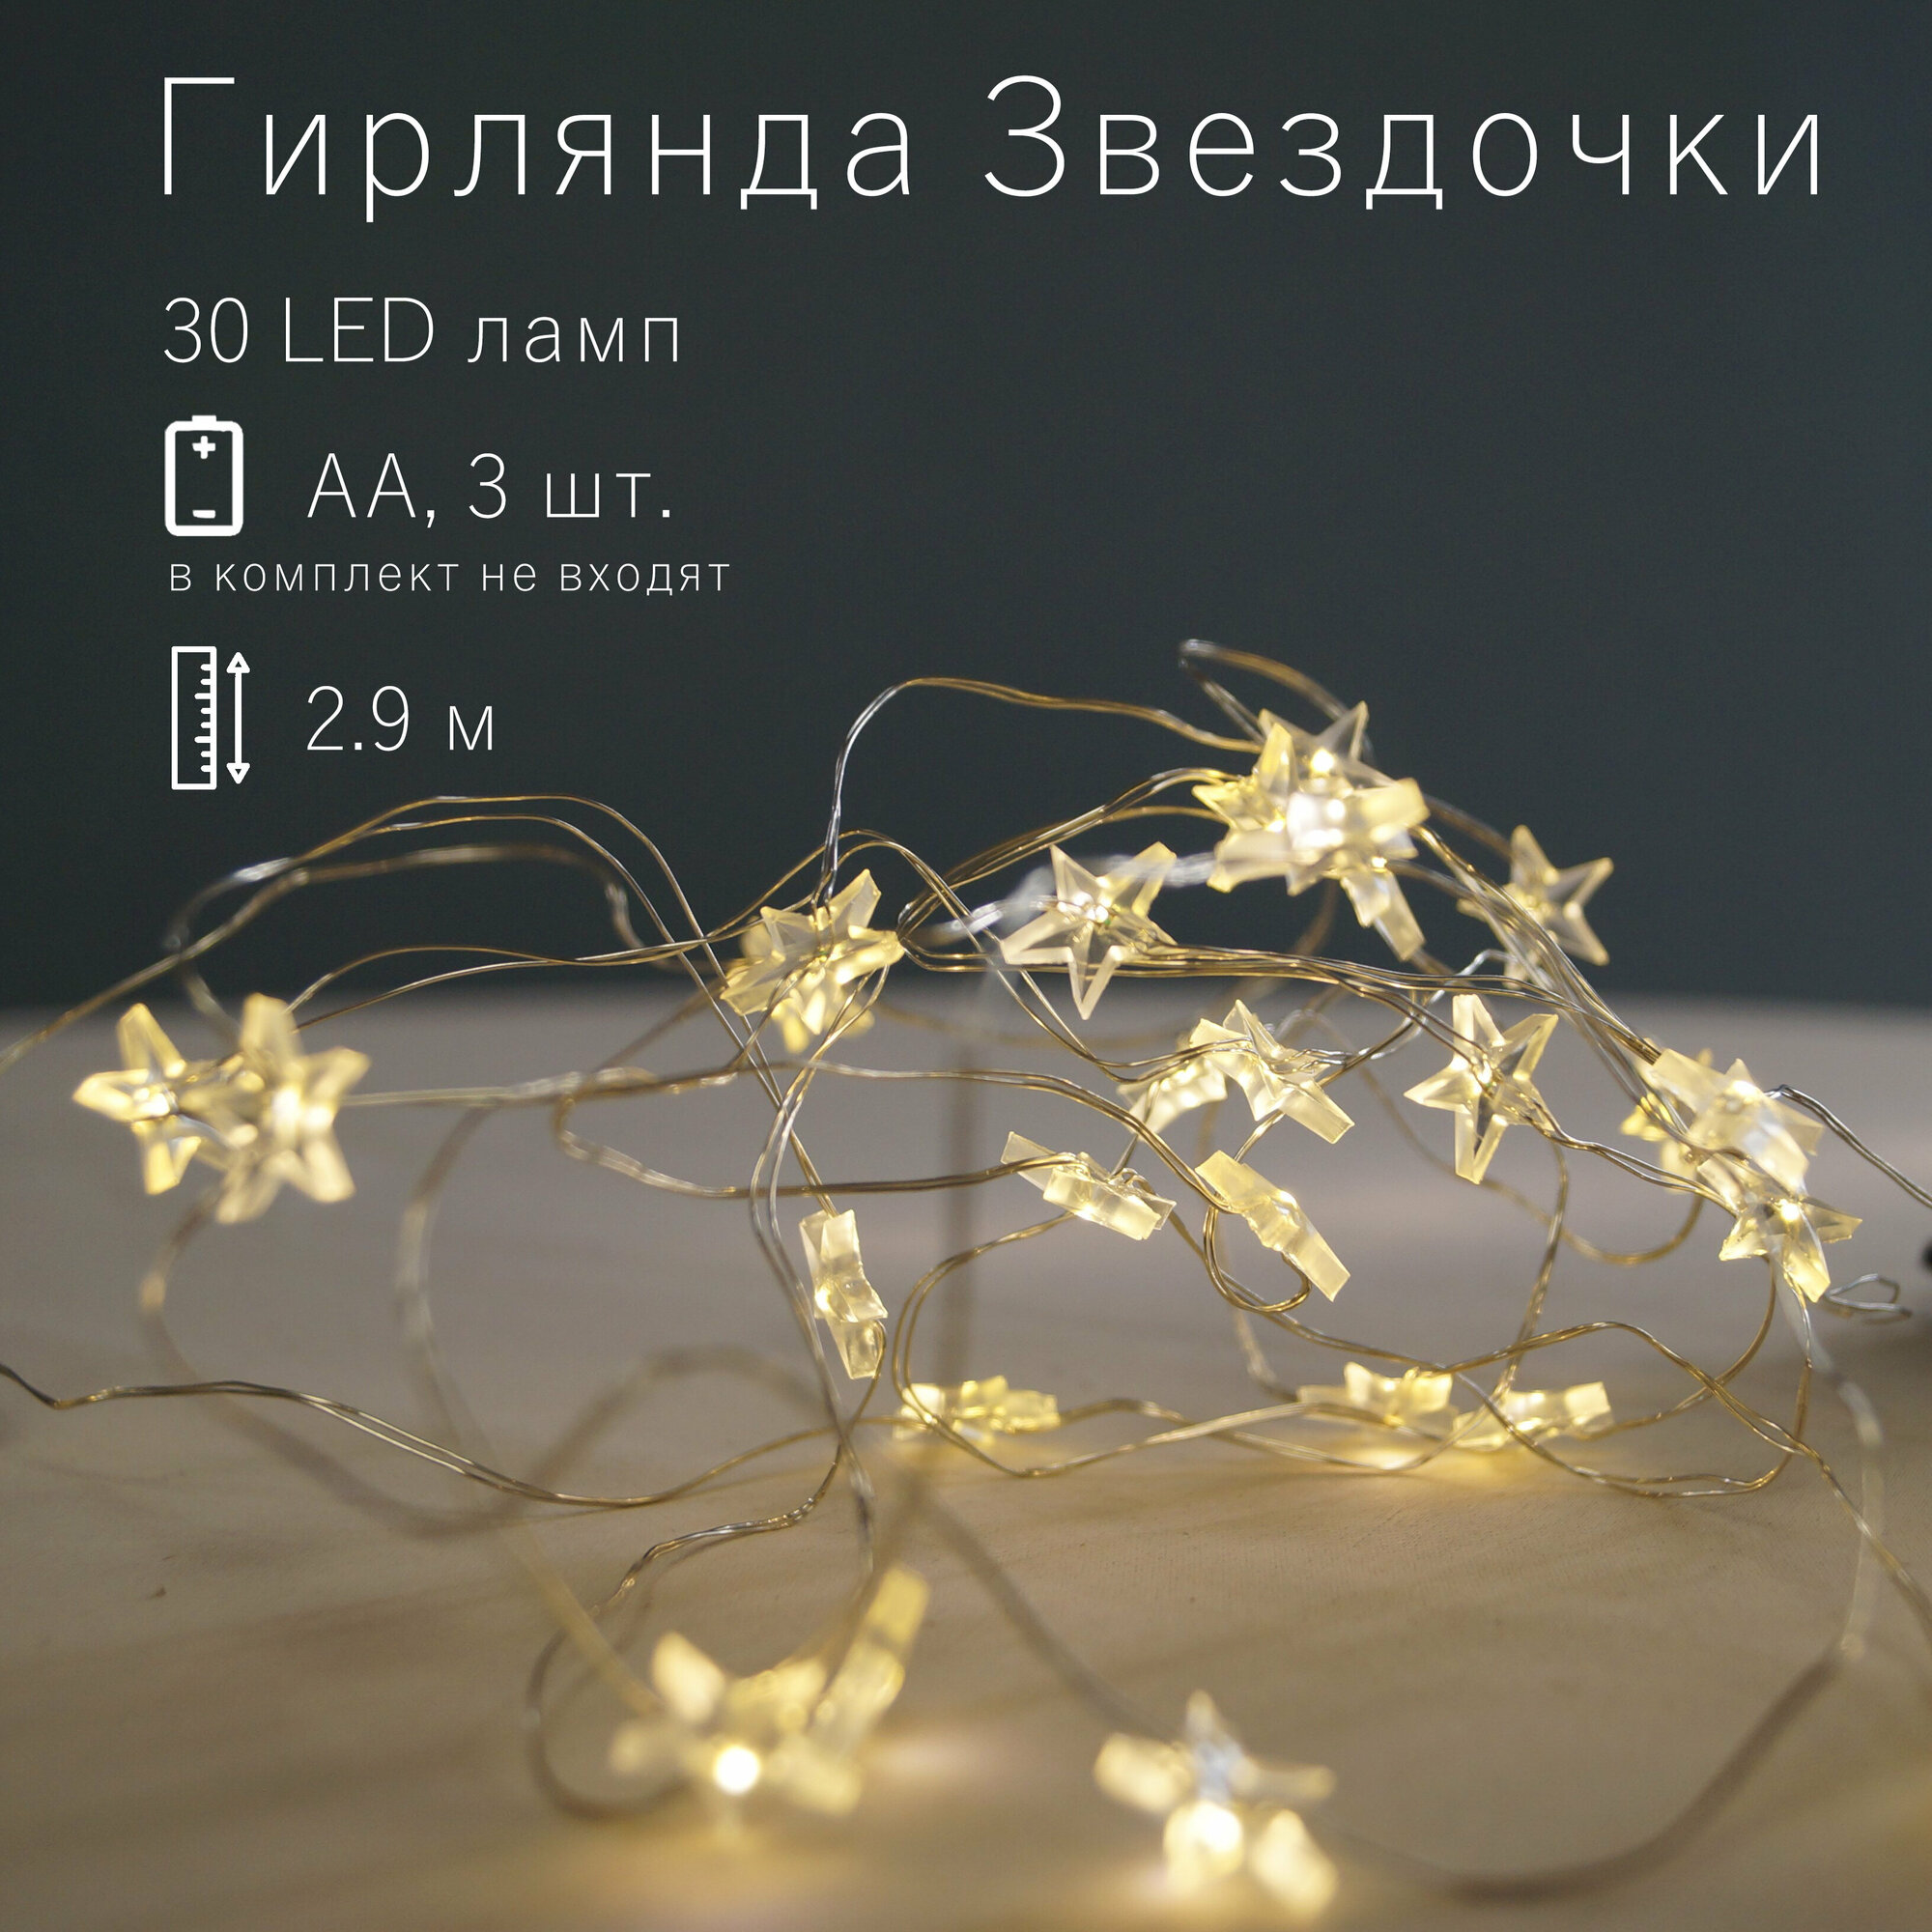 Гирлянда новогодняя Звездочки Luca Lighting на батарейках, 30 LED ламп, 2.9 м